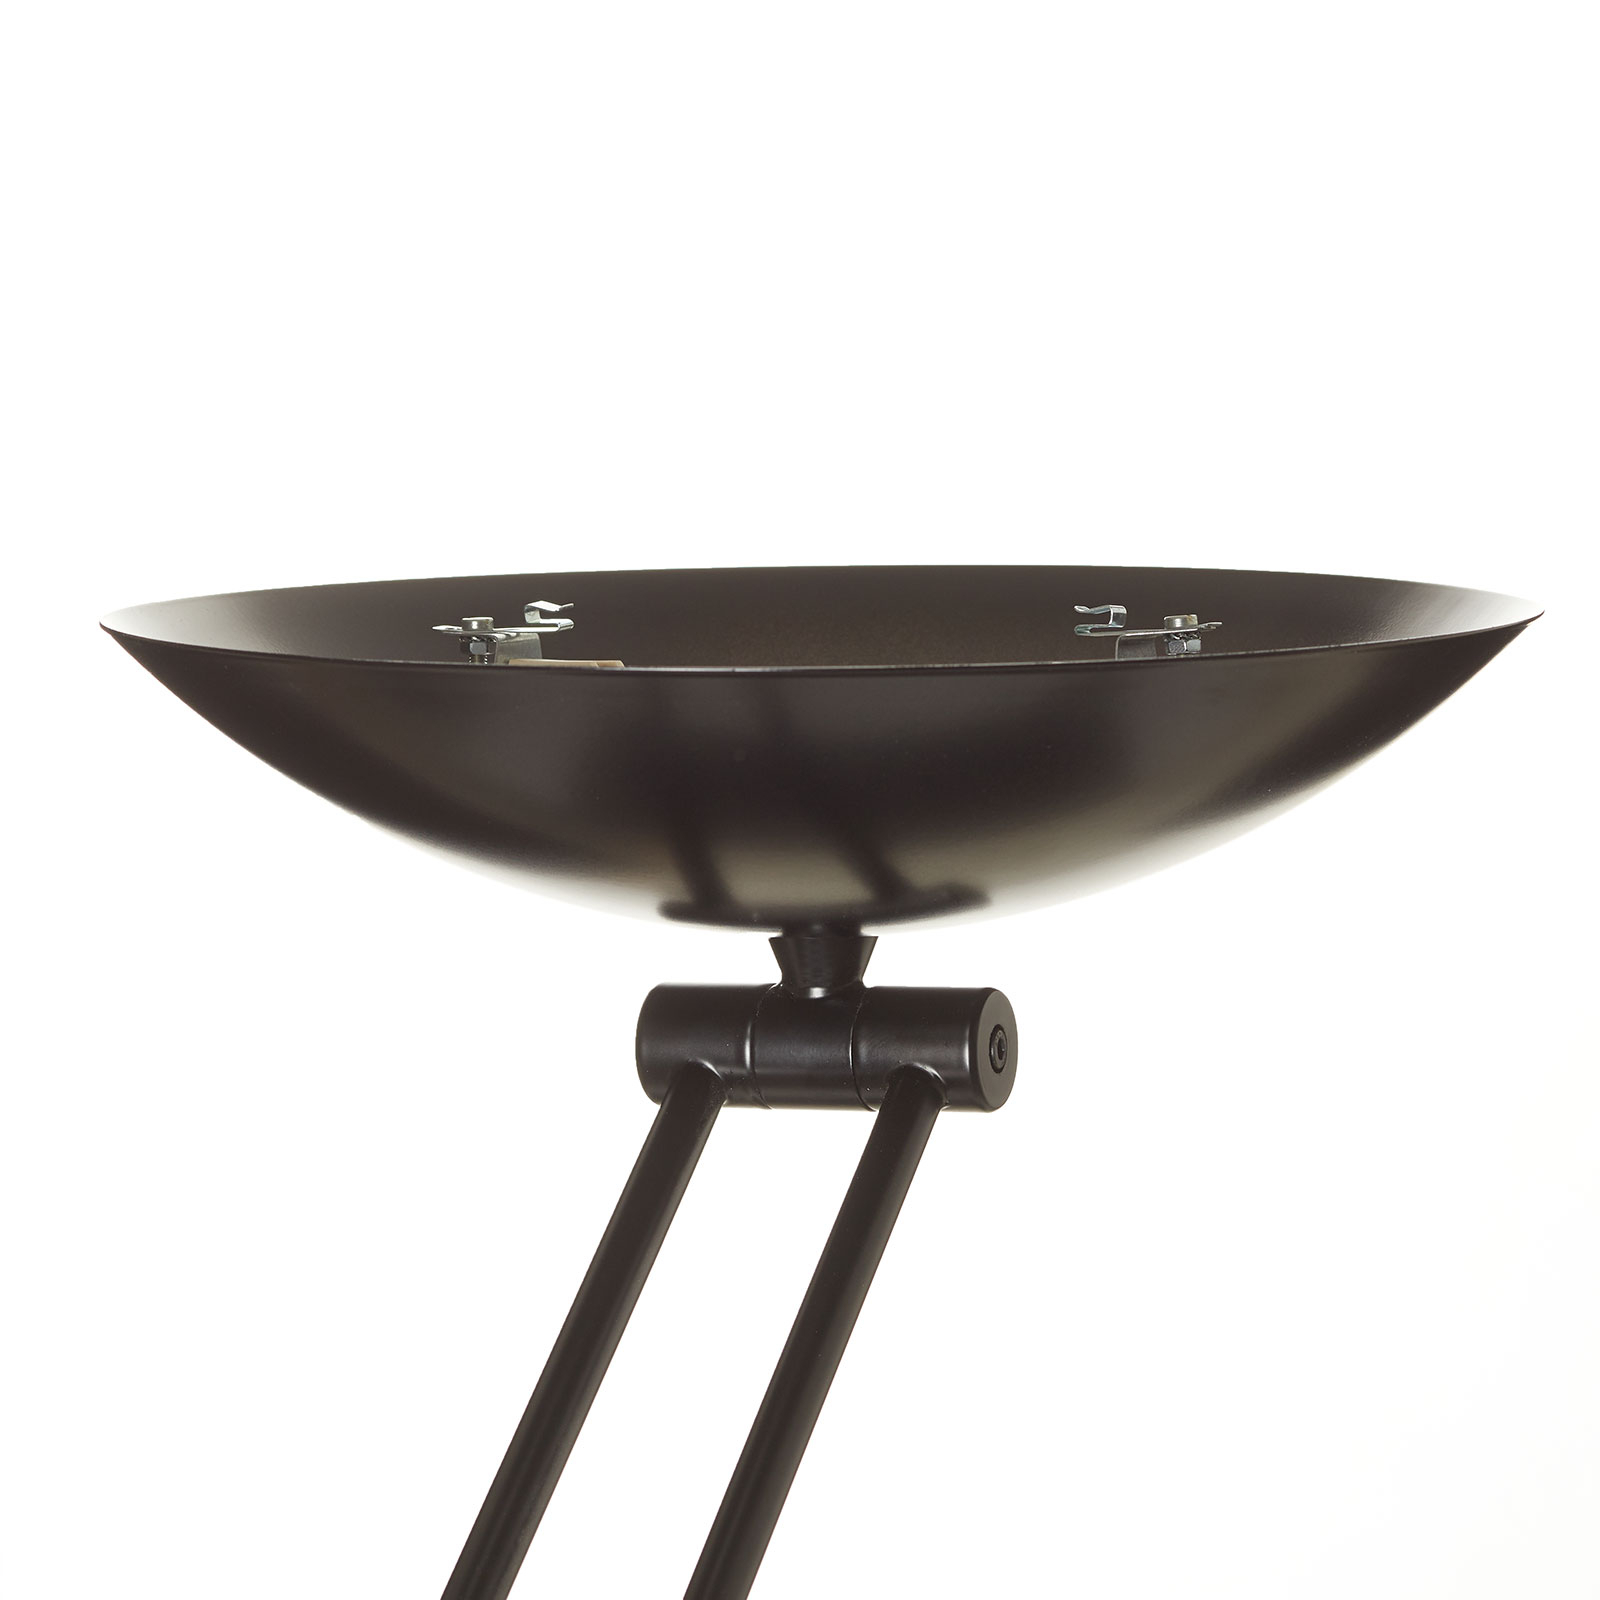 Lib V LED uplighter floor lamp, height-adjustable, black